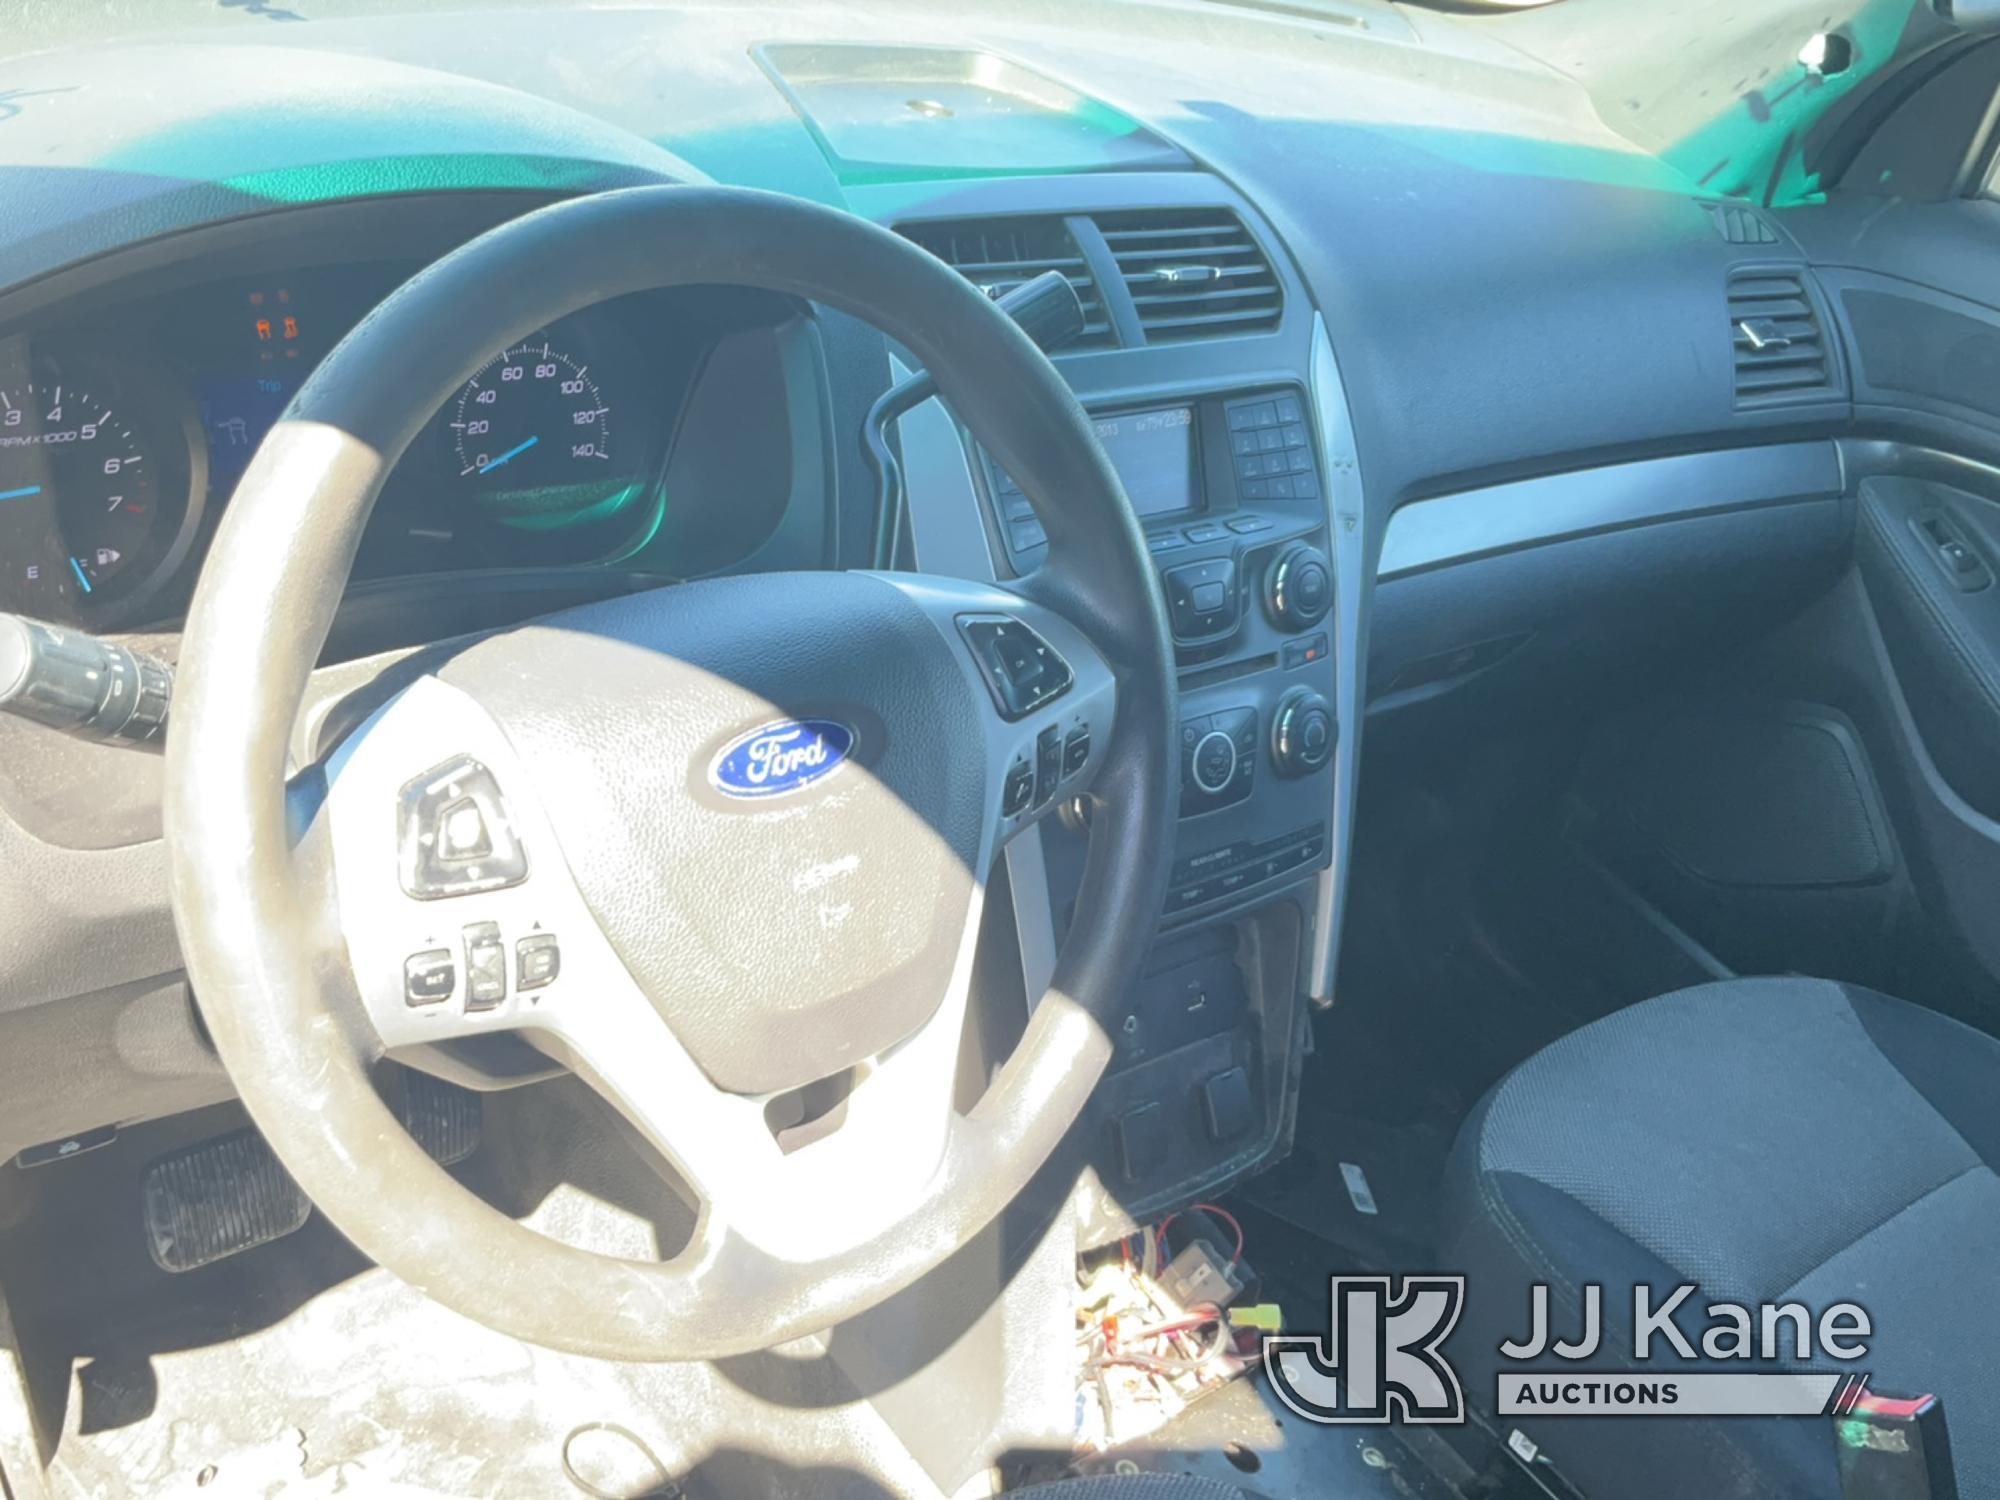 (Las Vegas, NV) 2014 Ford Explorer AWD Police Interceptor Body & Interior Damage, No Console, Tracti